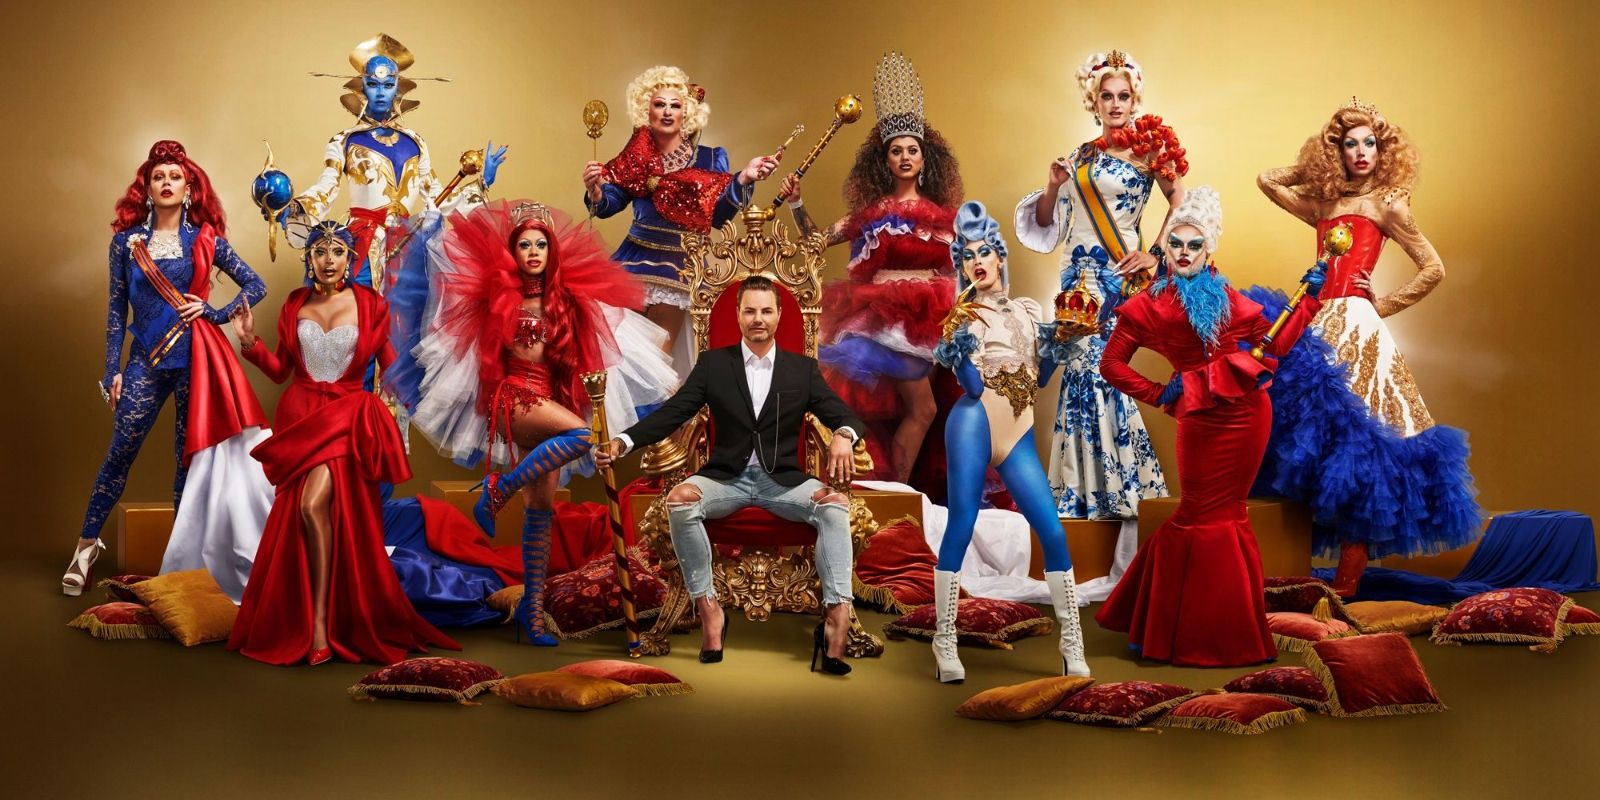 A group photo of the season 1 cast of RuPaul's Drag Race Holland.